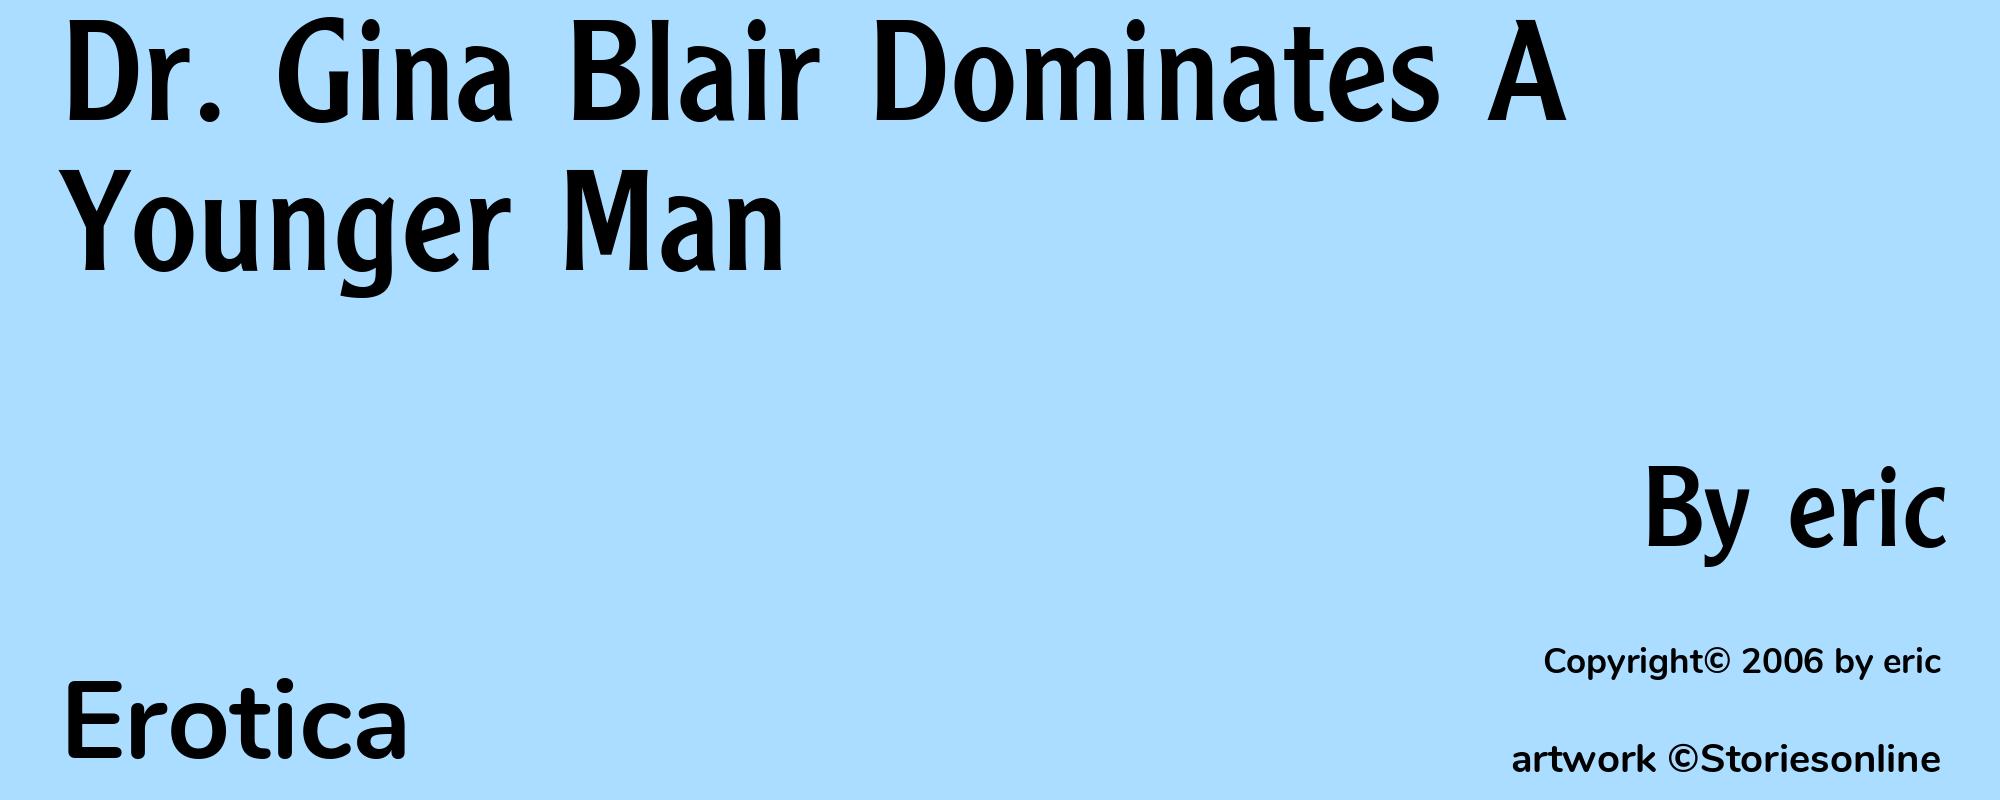 Dr. Gina Blair Dominates A Younger Man - Cover